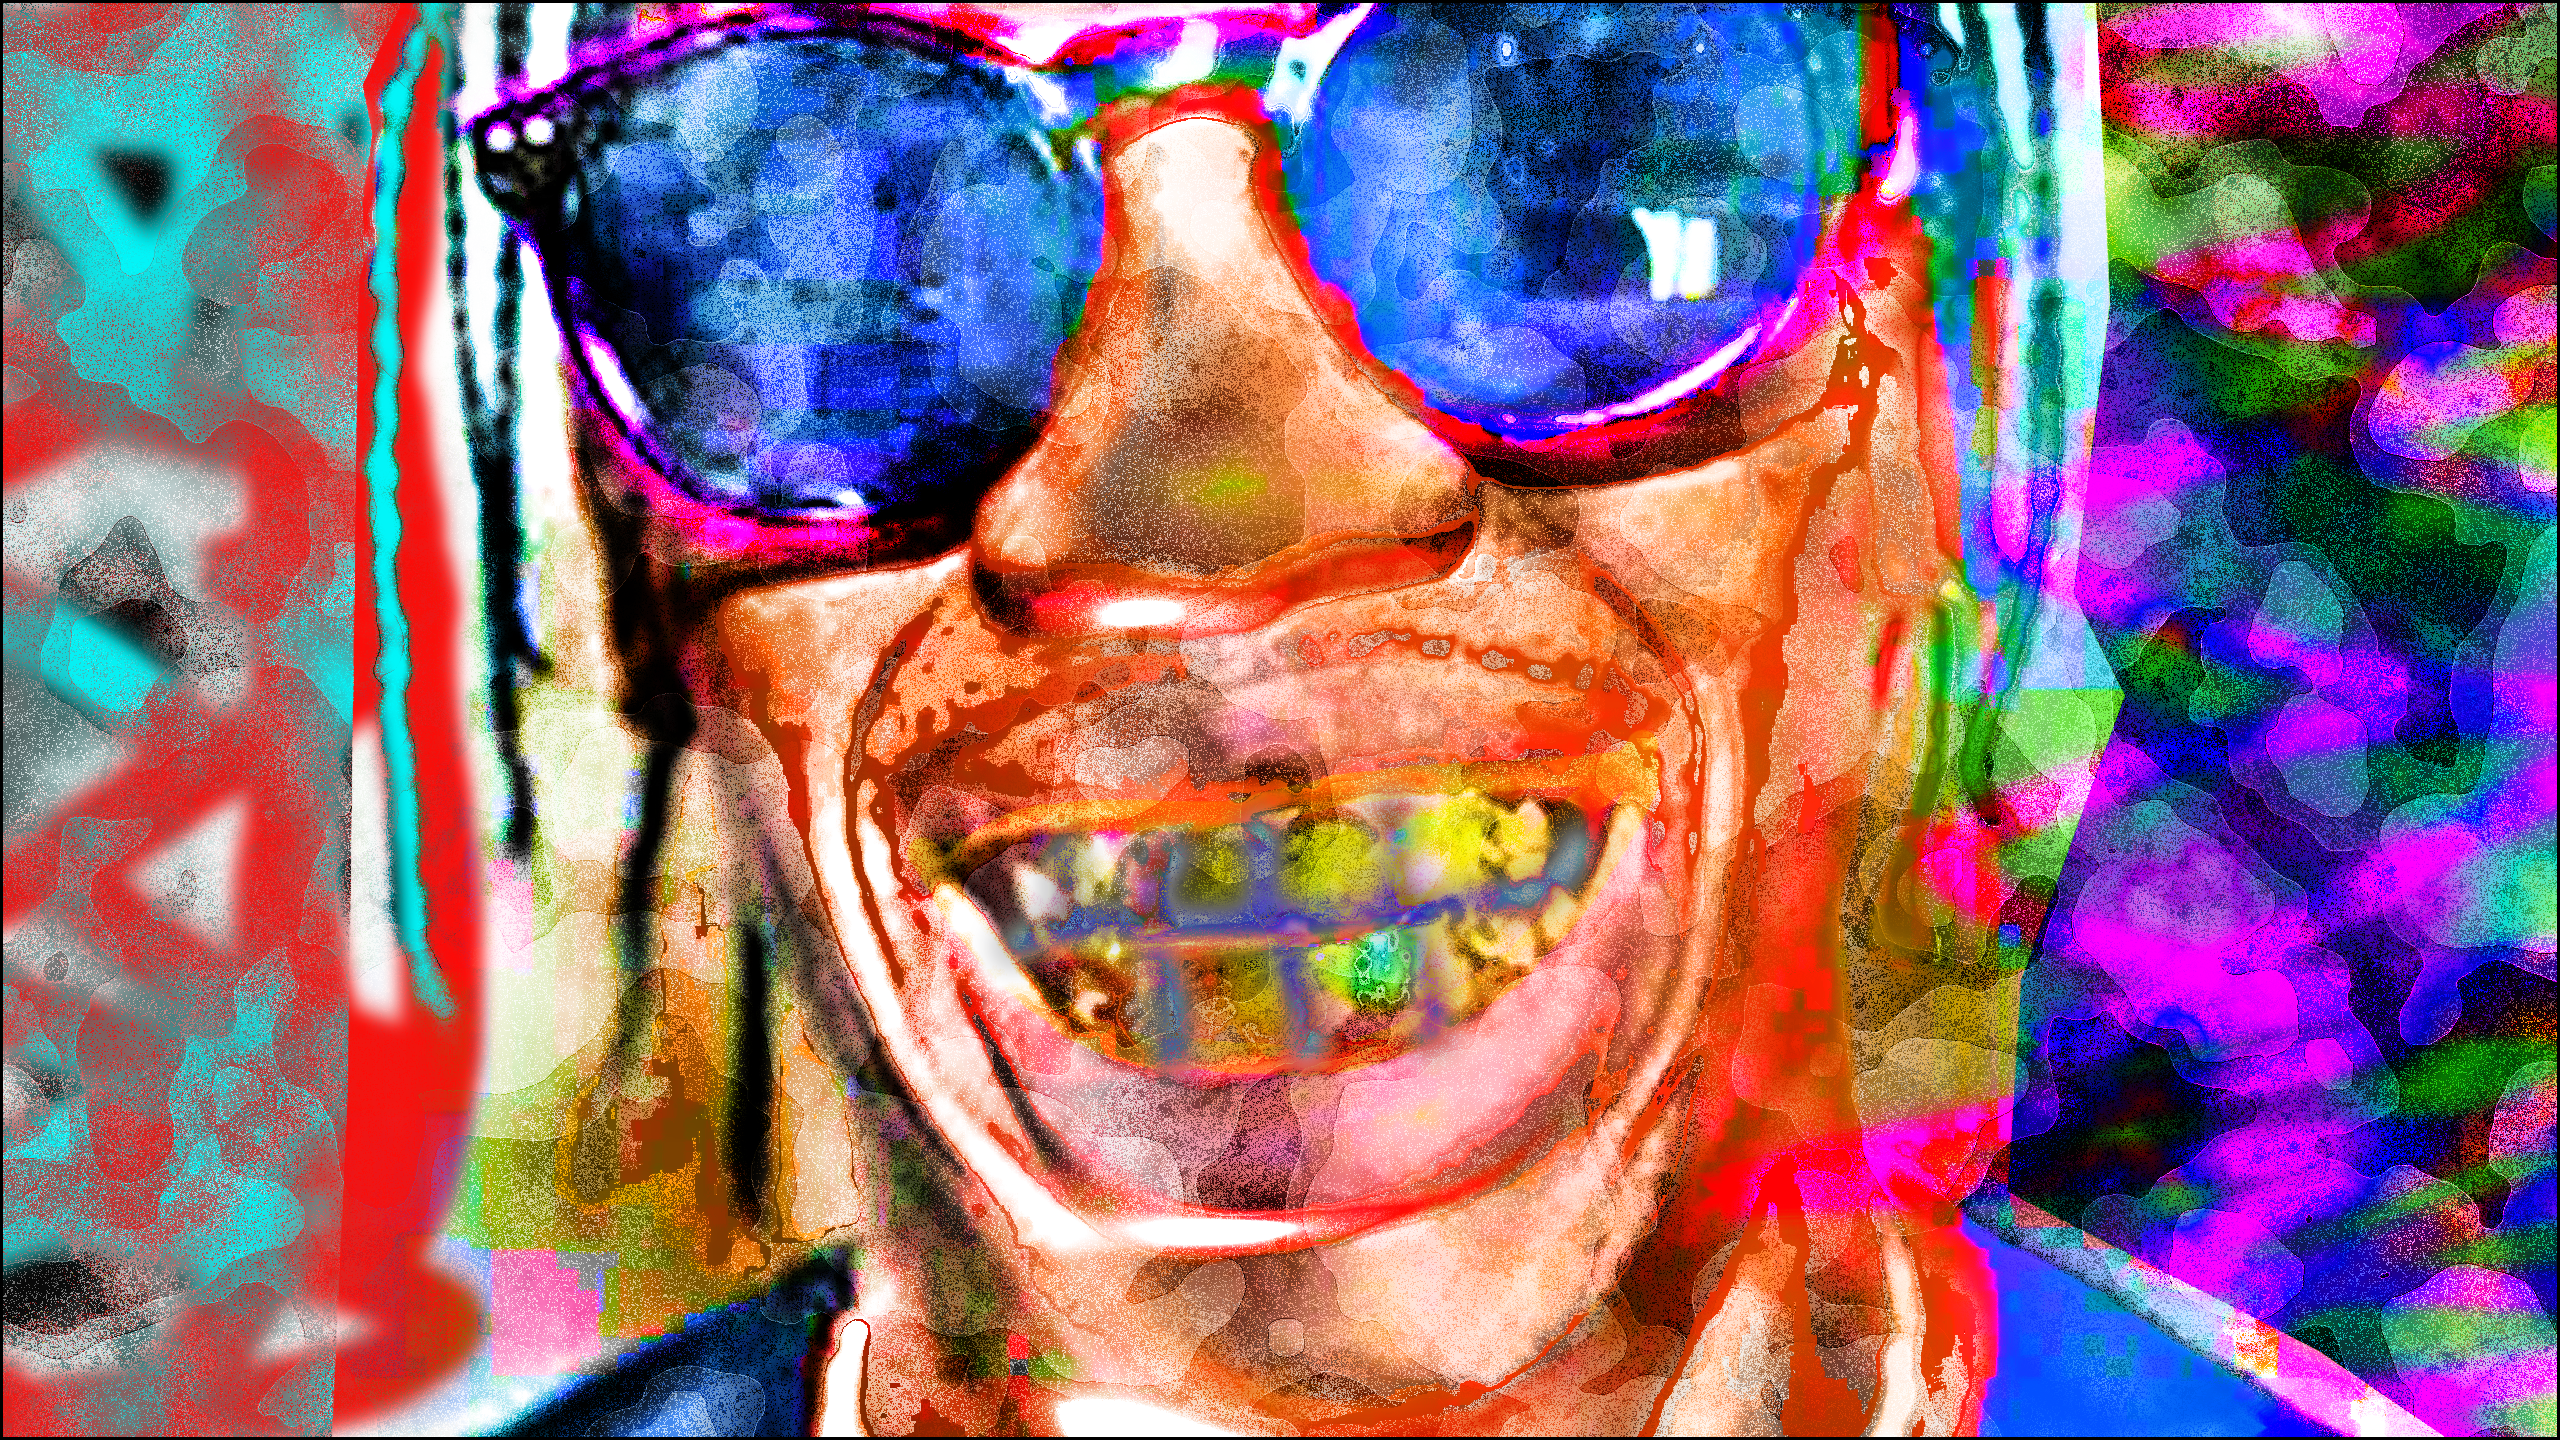 General 2560x1440 abstract rap  bright LSD Rapper singer colorful sunglasses face teeth closeup artwork music